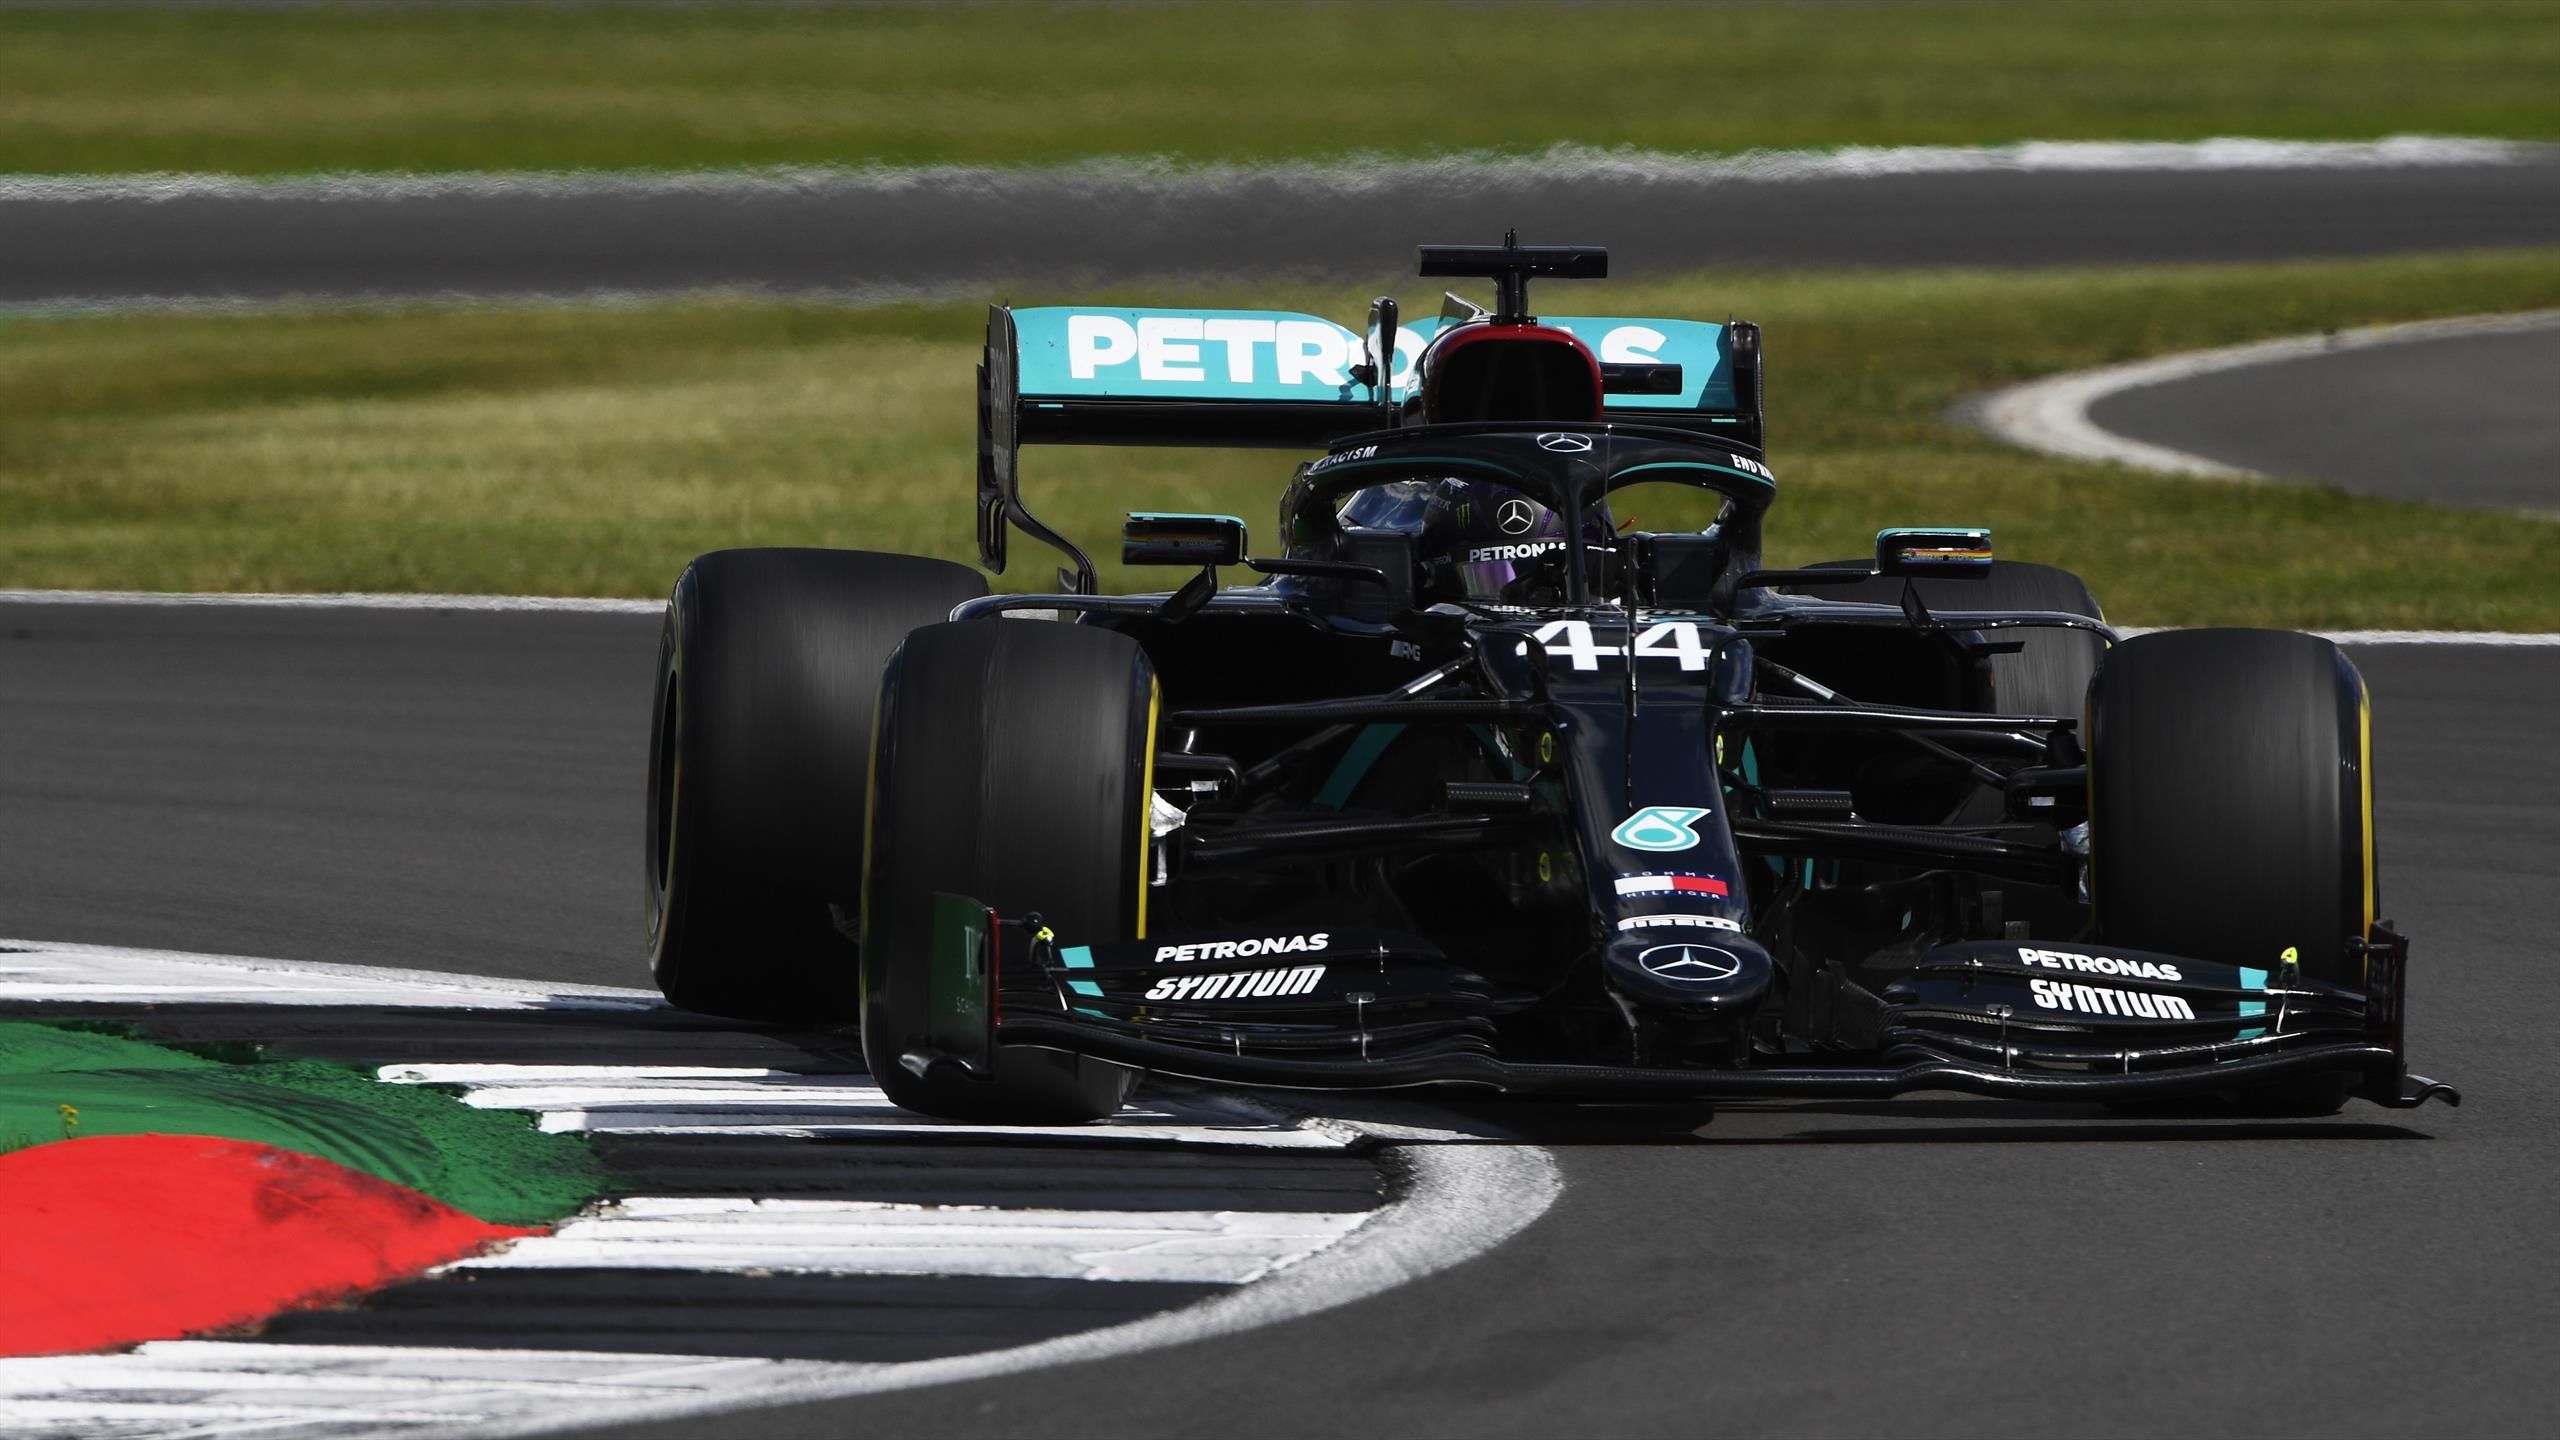 Lewis Hamilton wins his seventh British Grand Prix at Silverstone despite final-lap puncture